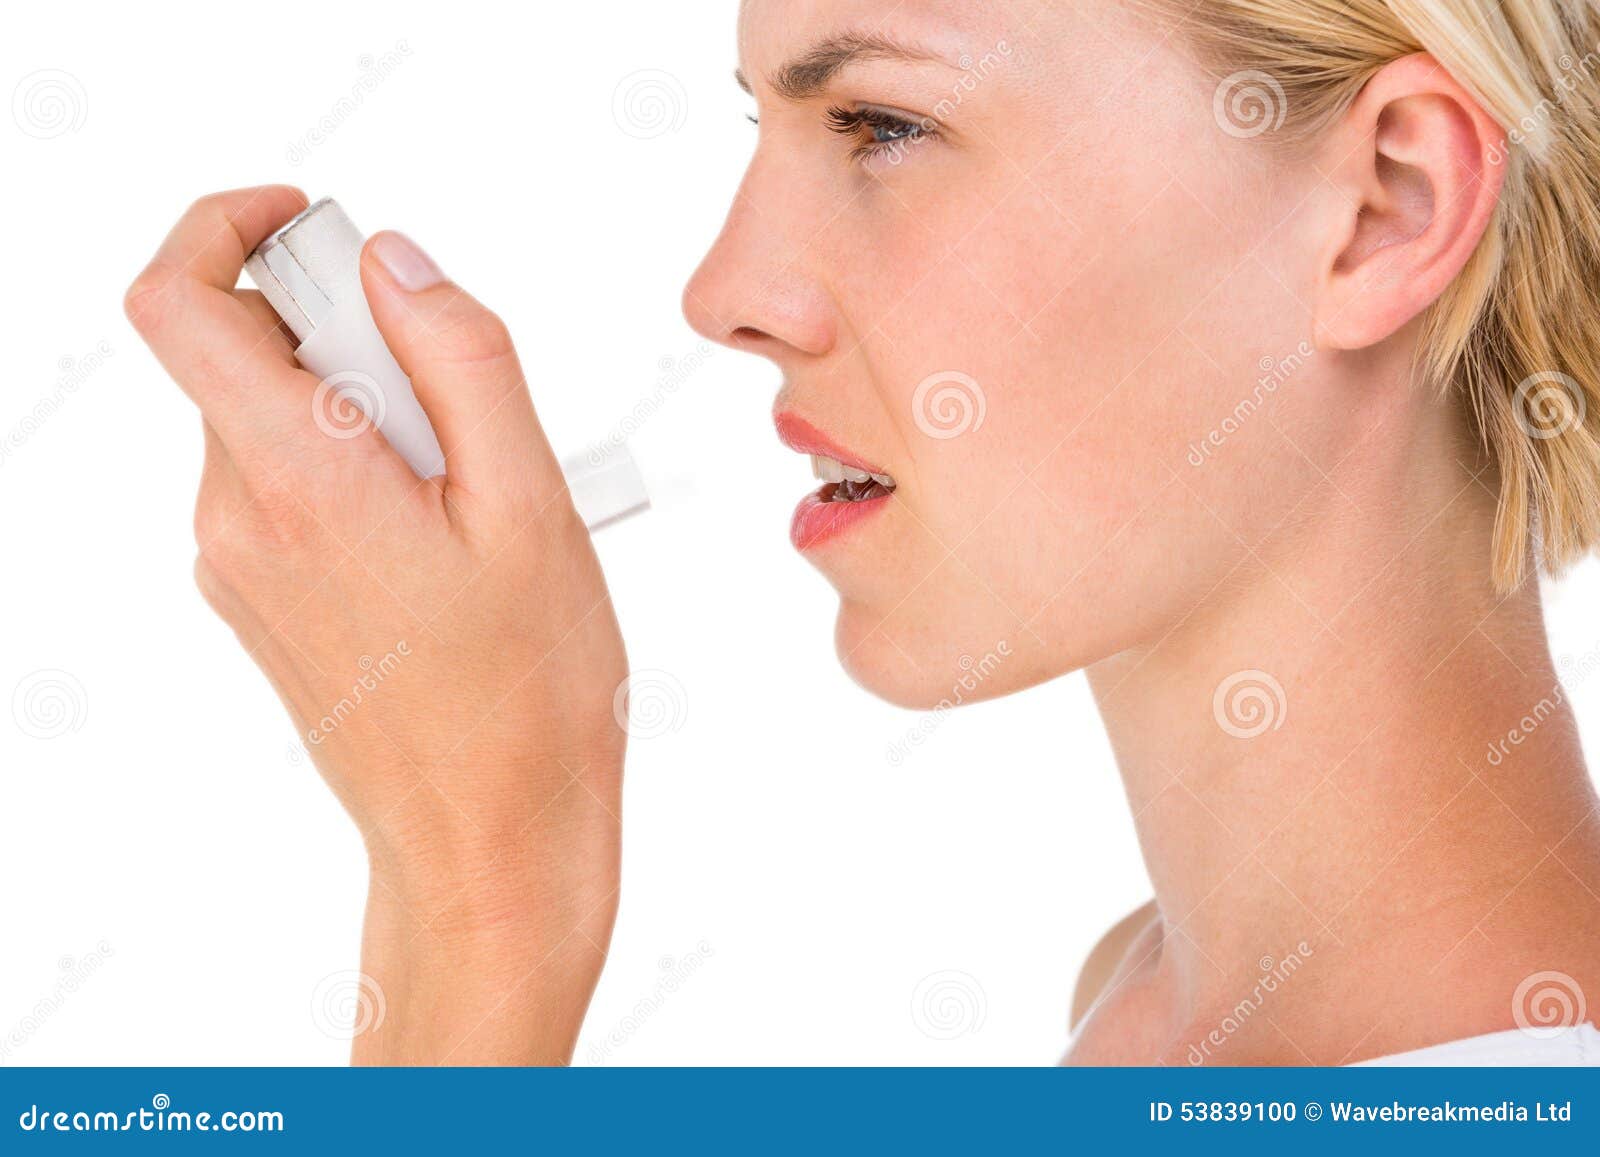 asthmatic pretty blonde woman using inhaler